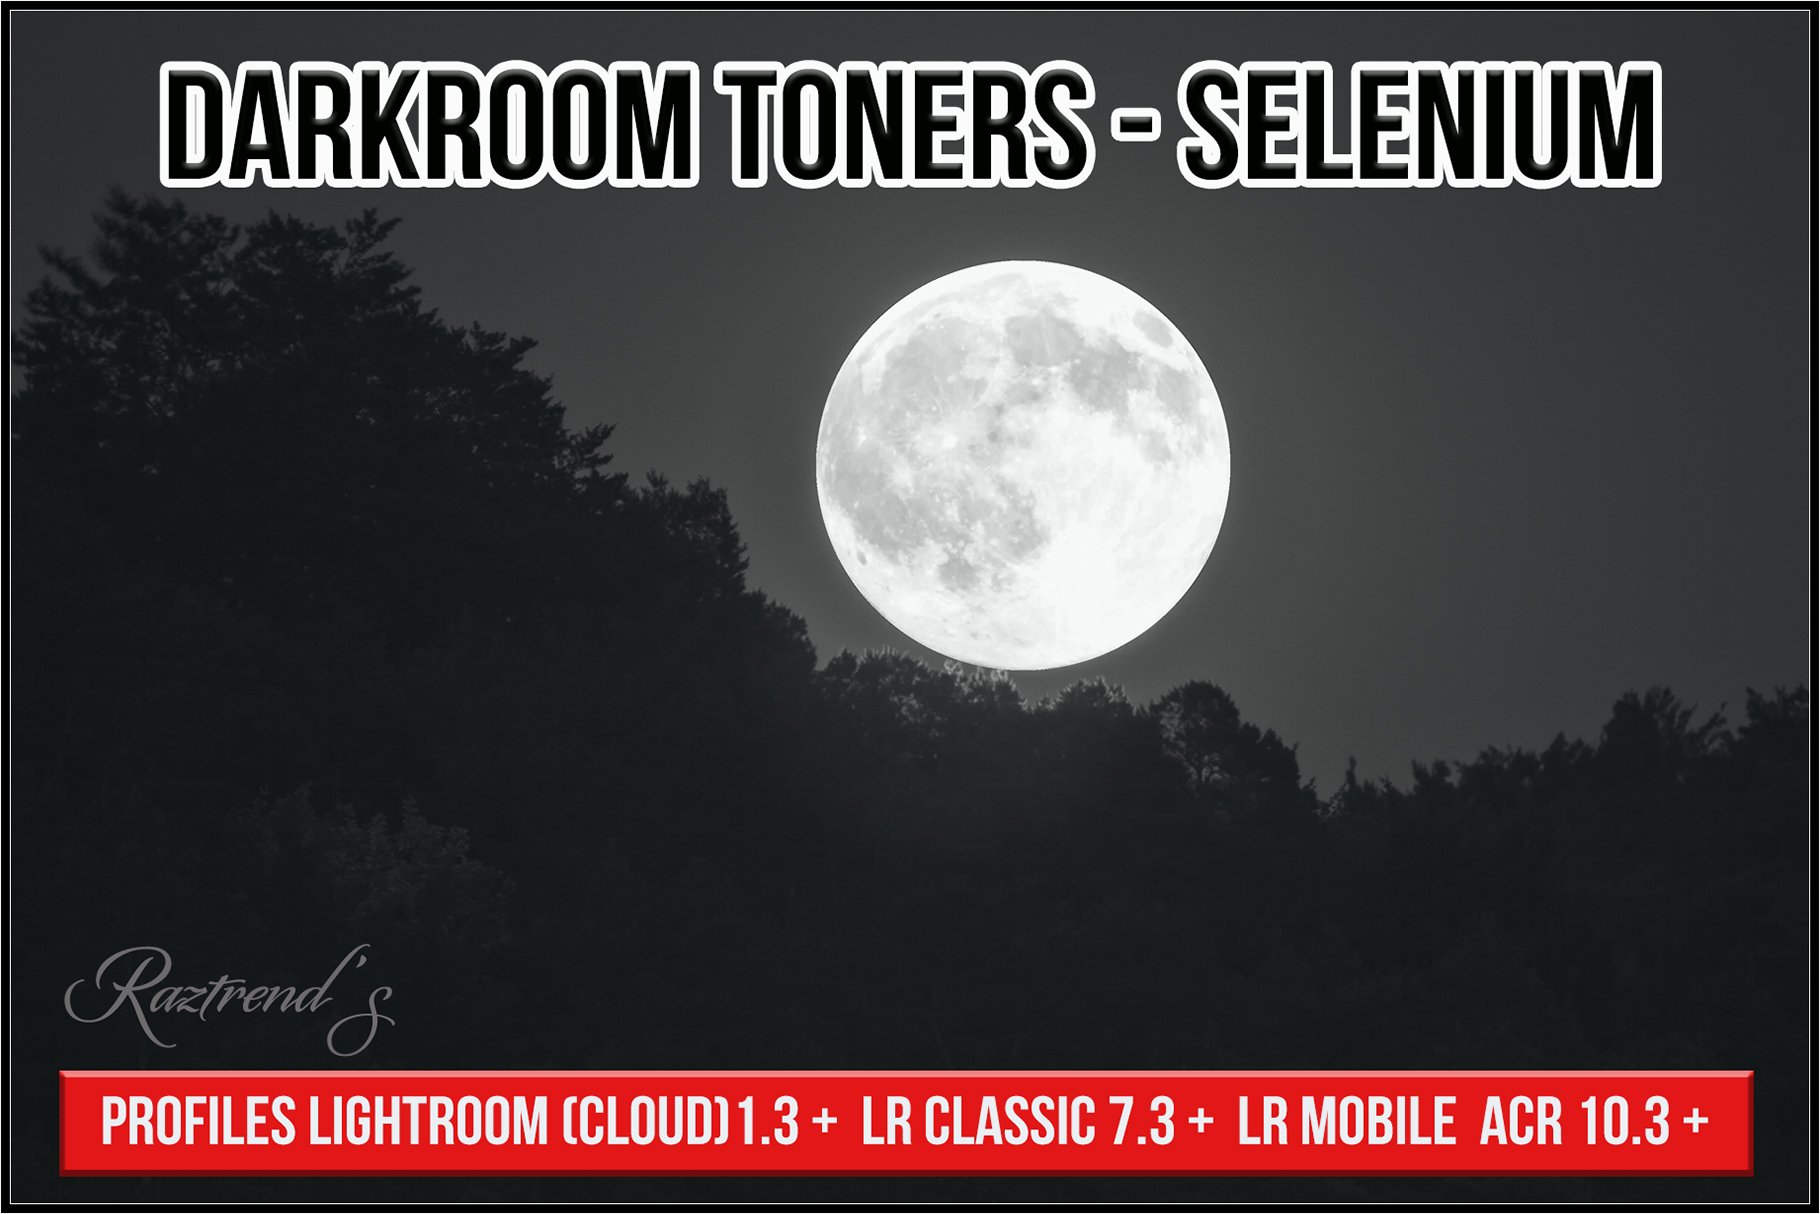 Darkroom Toners - Seleniumcover image.